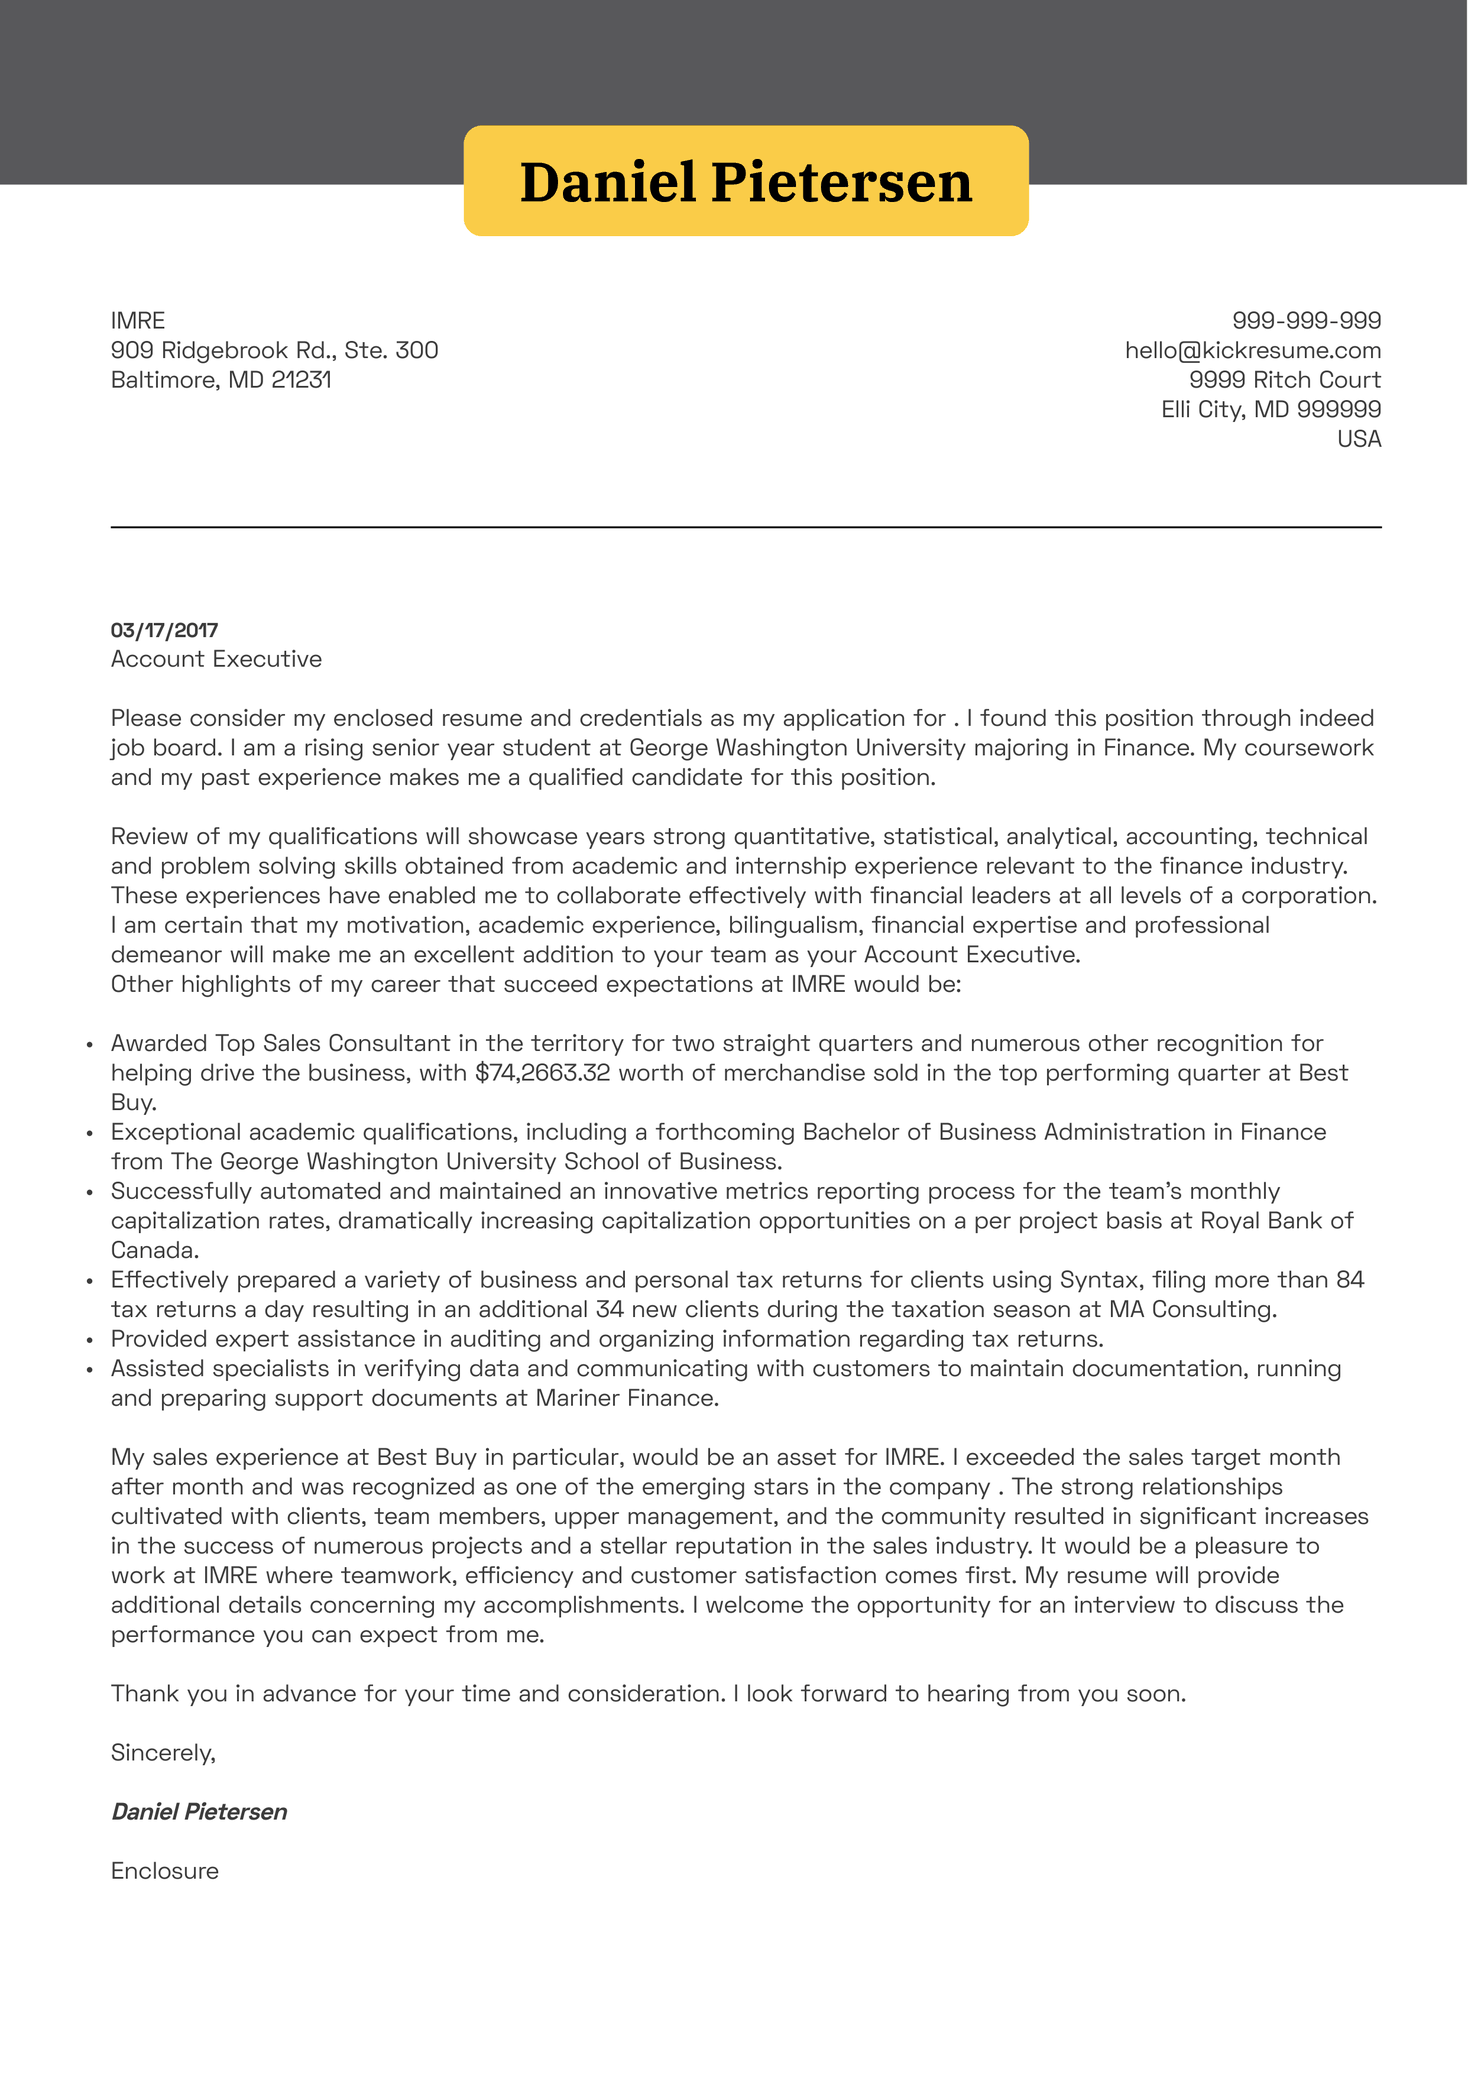 Algorithm Design Engineer Cover Letter Example